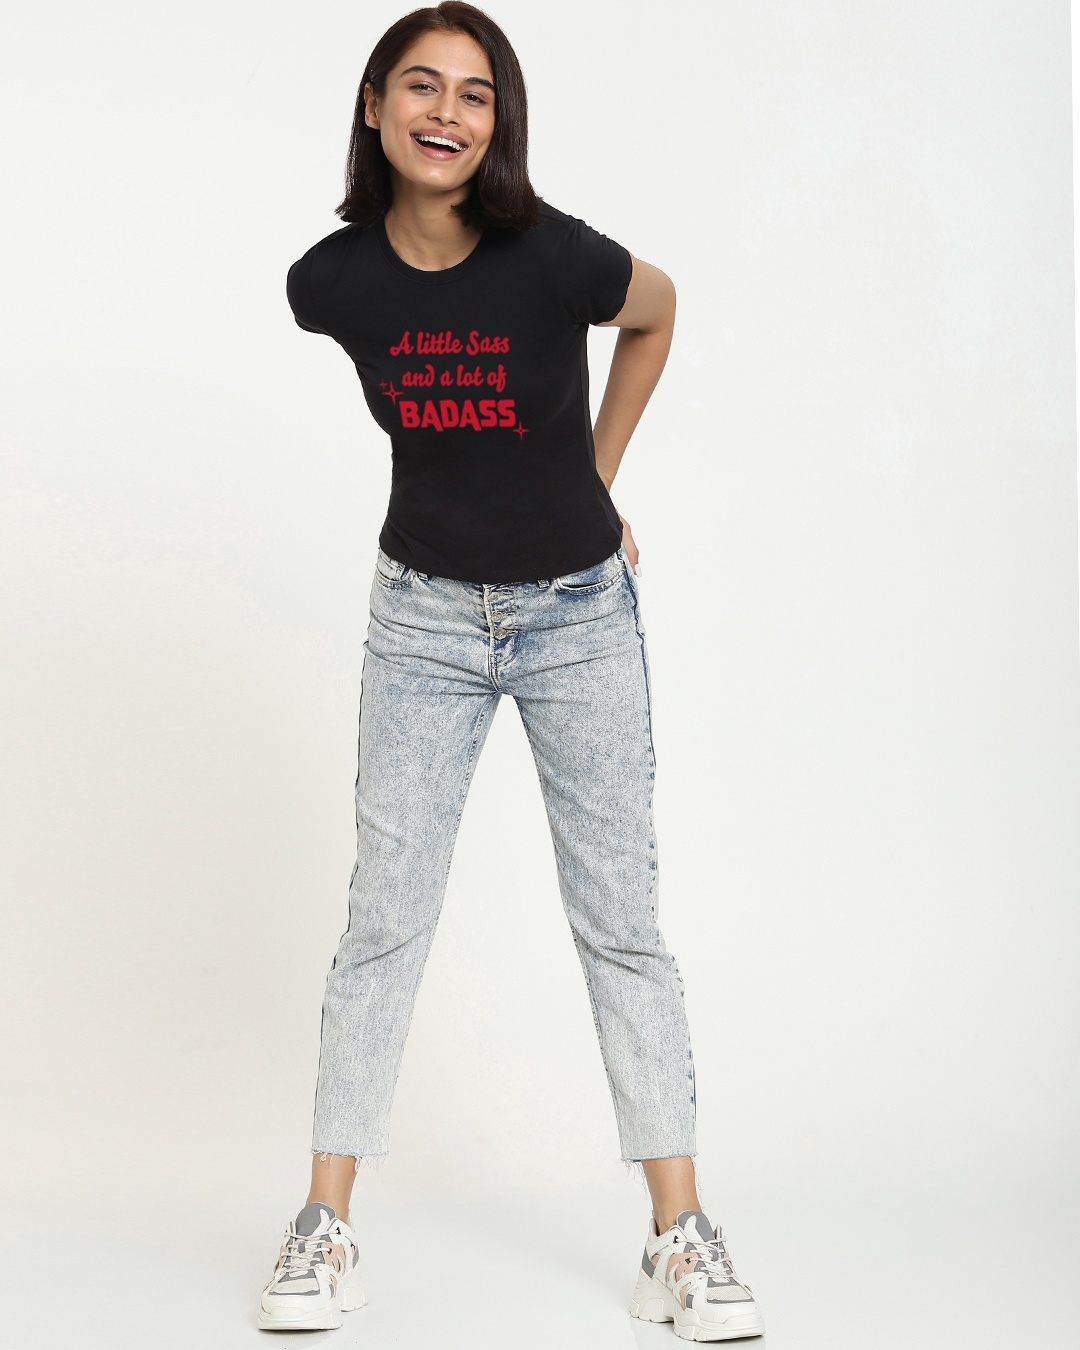 Shop Women's Black Saas and Badass T-shirt-Design